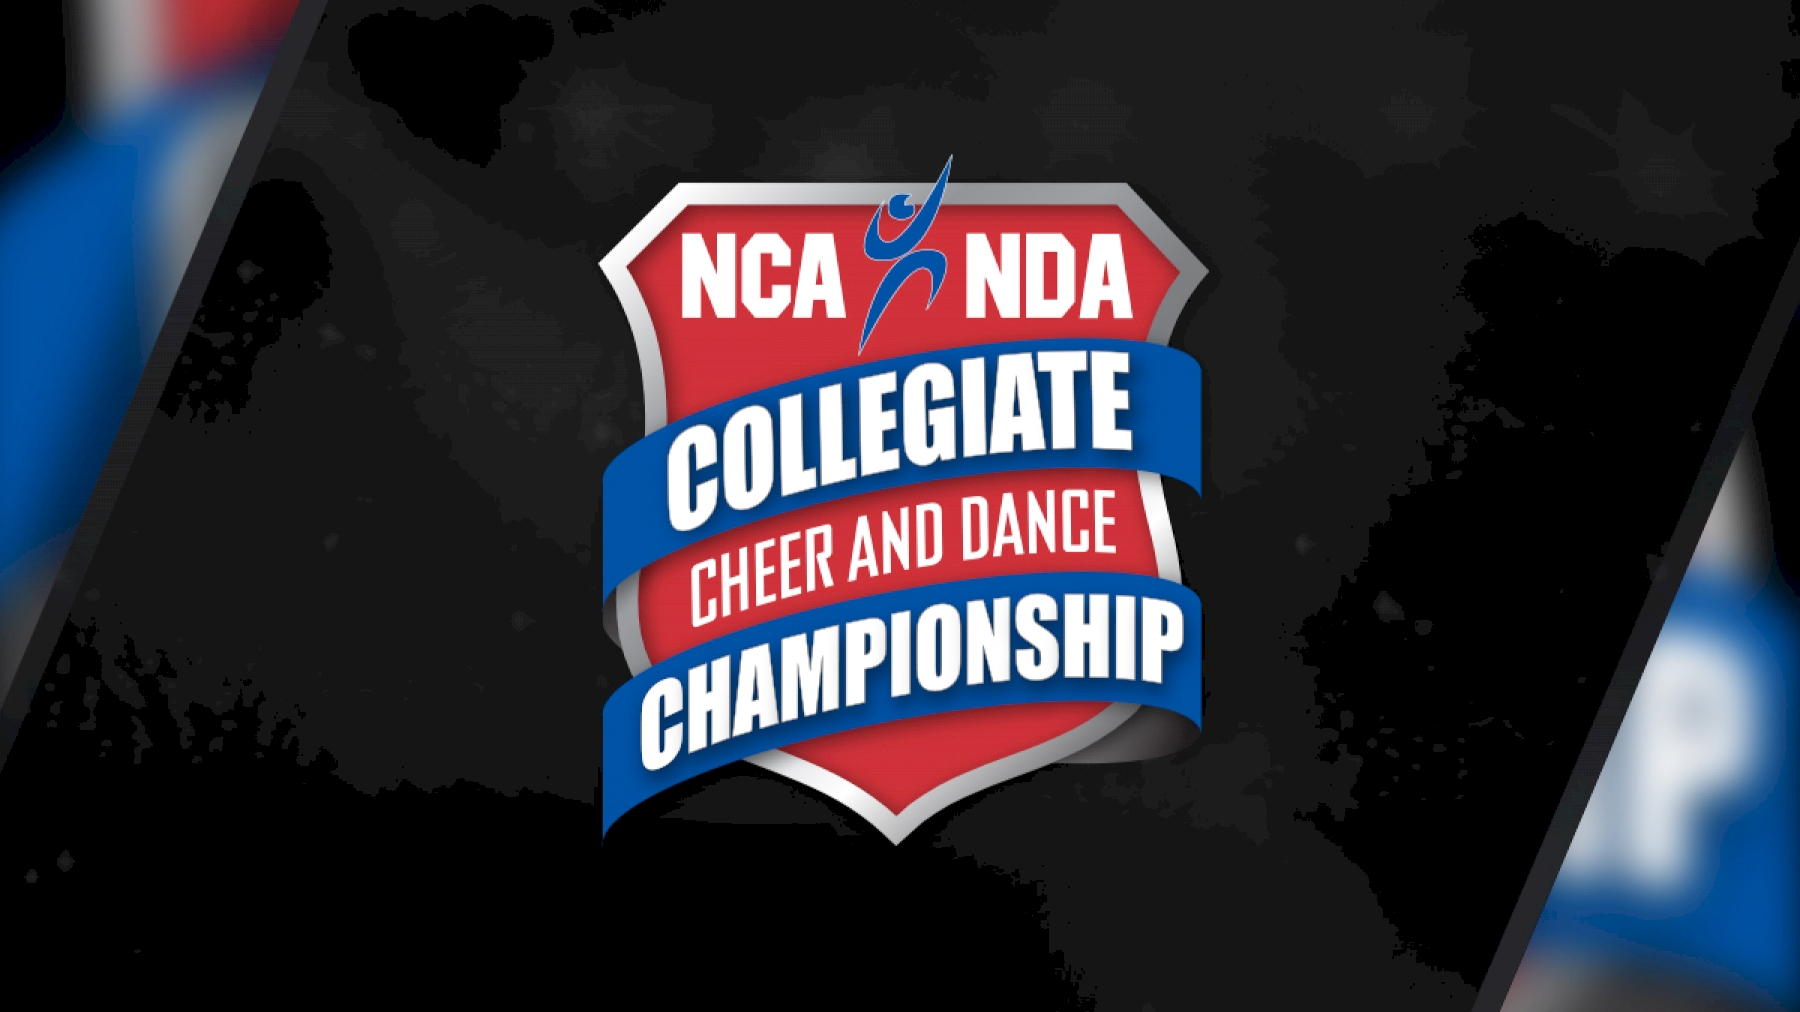 2021 NCA & NDA Collegiate Cheer & Dance Championship - Varsity TV Event